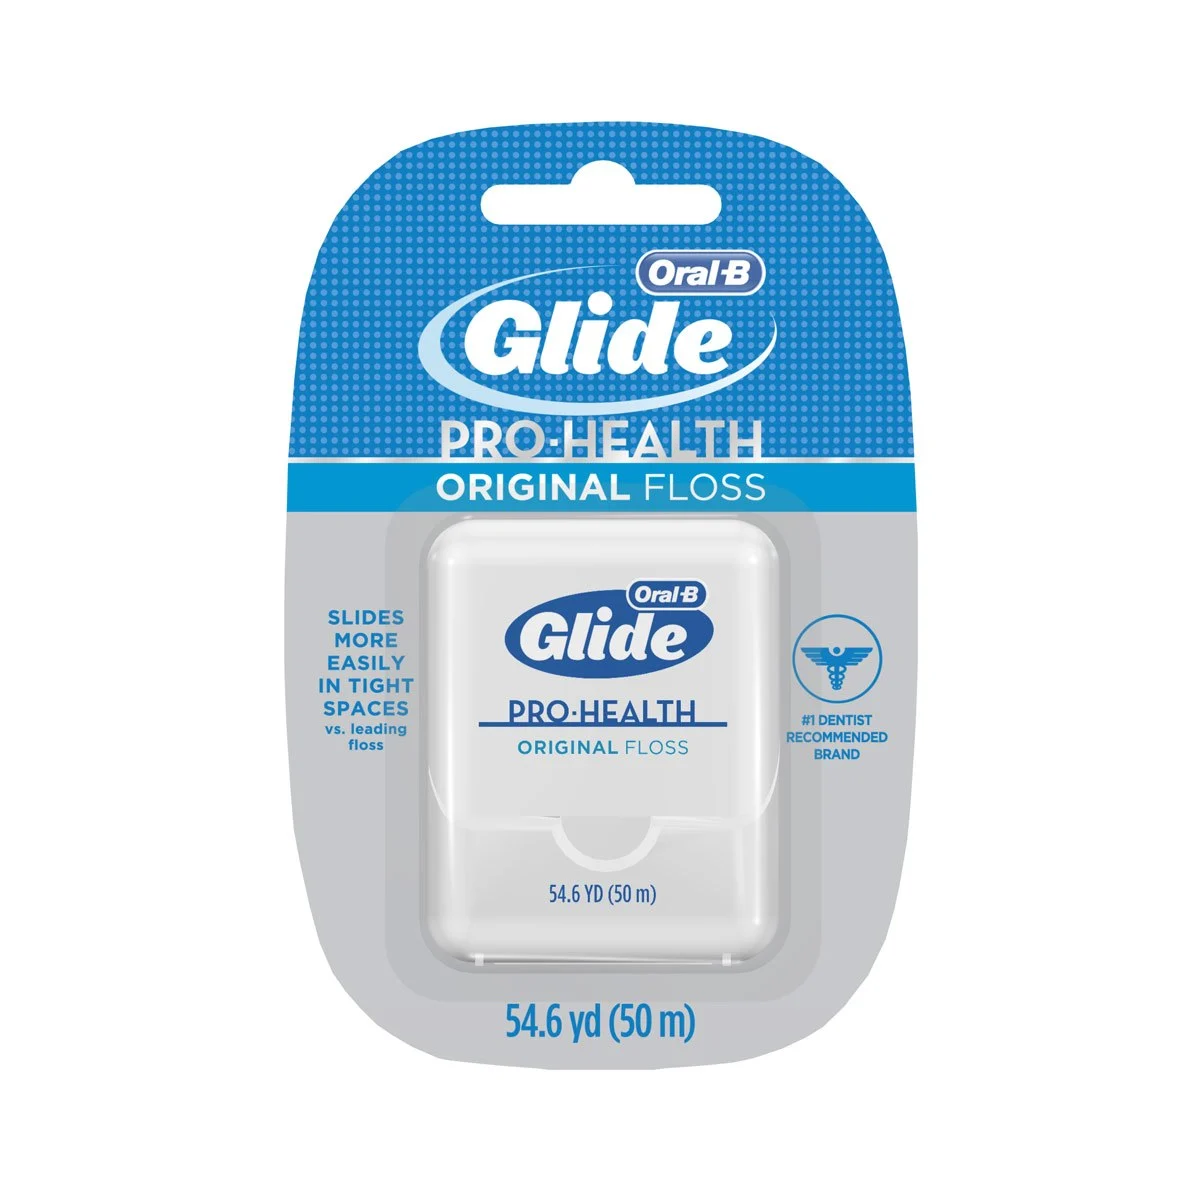 Oral-B Glide Pro-Health Original Floss 